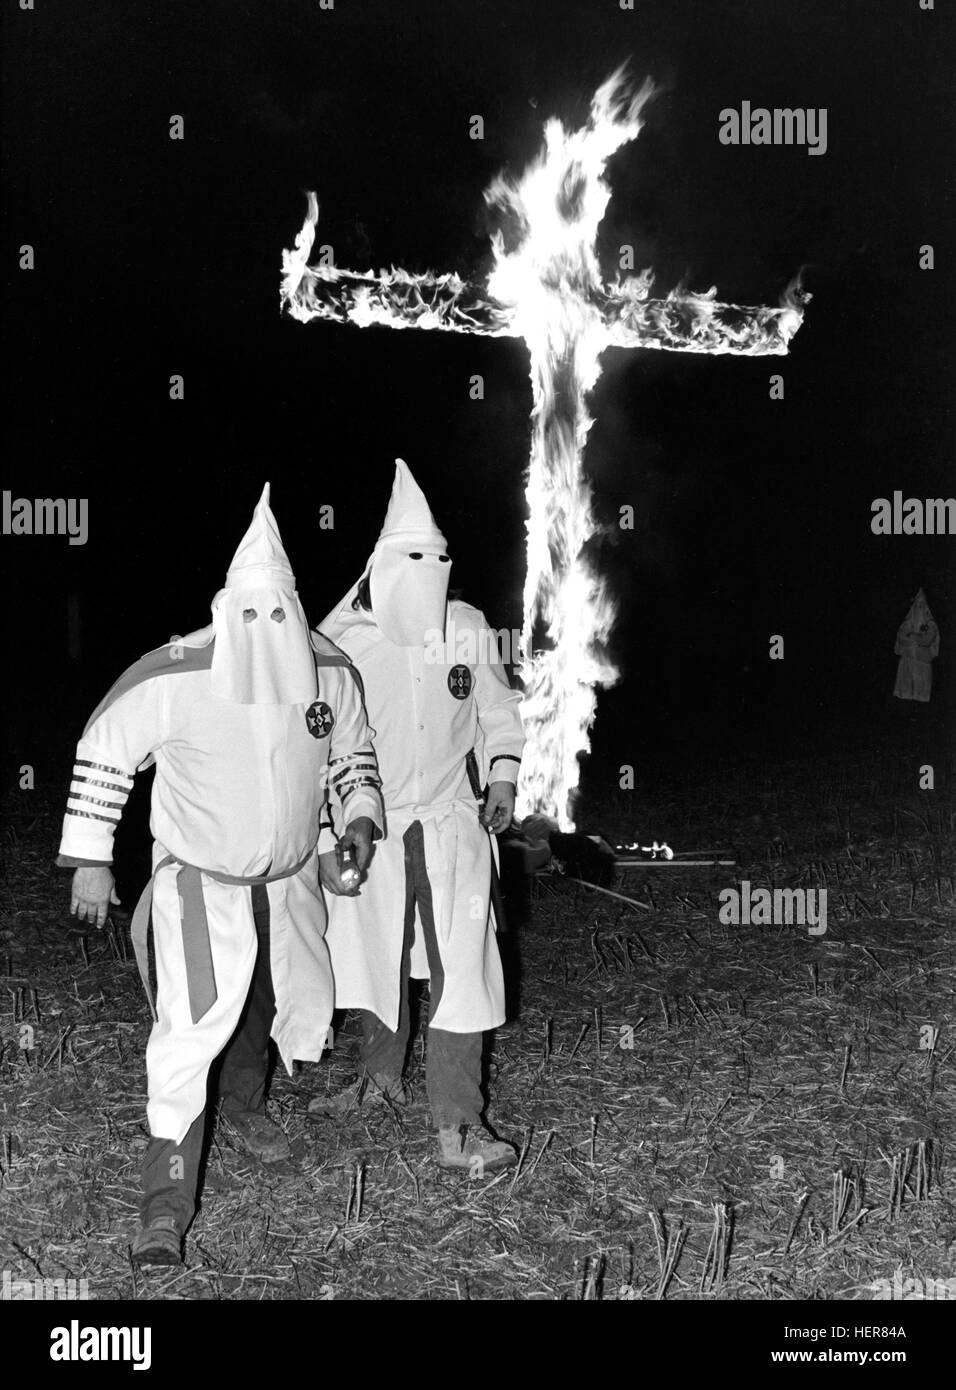 Cross Burning at Ku Klux Klan Rally - Macon, Georgia - 1975. Stock Photo